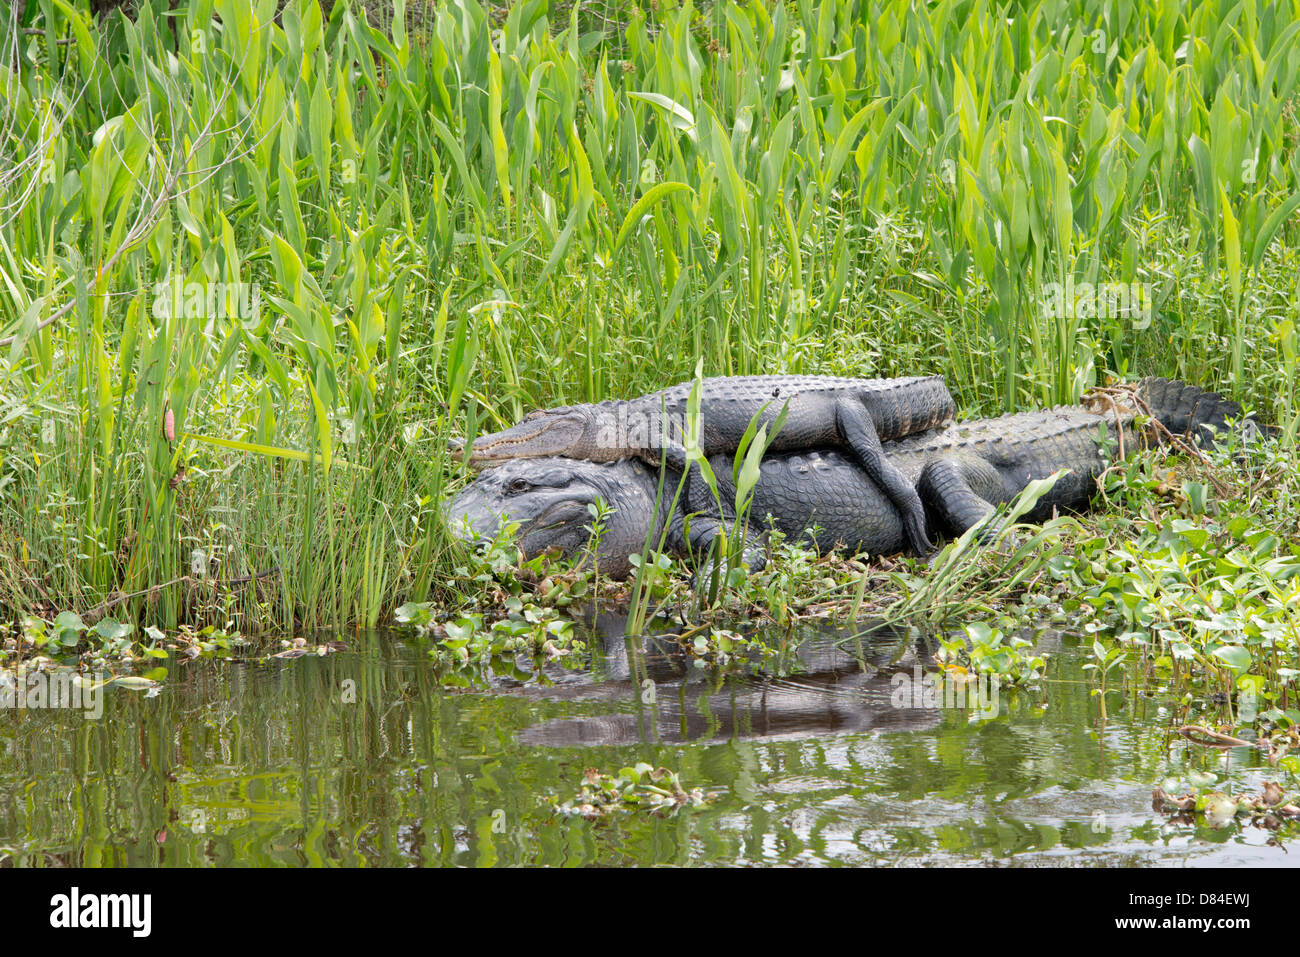 Louisiana, New Orleans, Lafitte. Jean Lafitte National Historical Park - Barataria Preserve. American alligator. Stock Photo